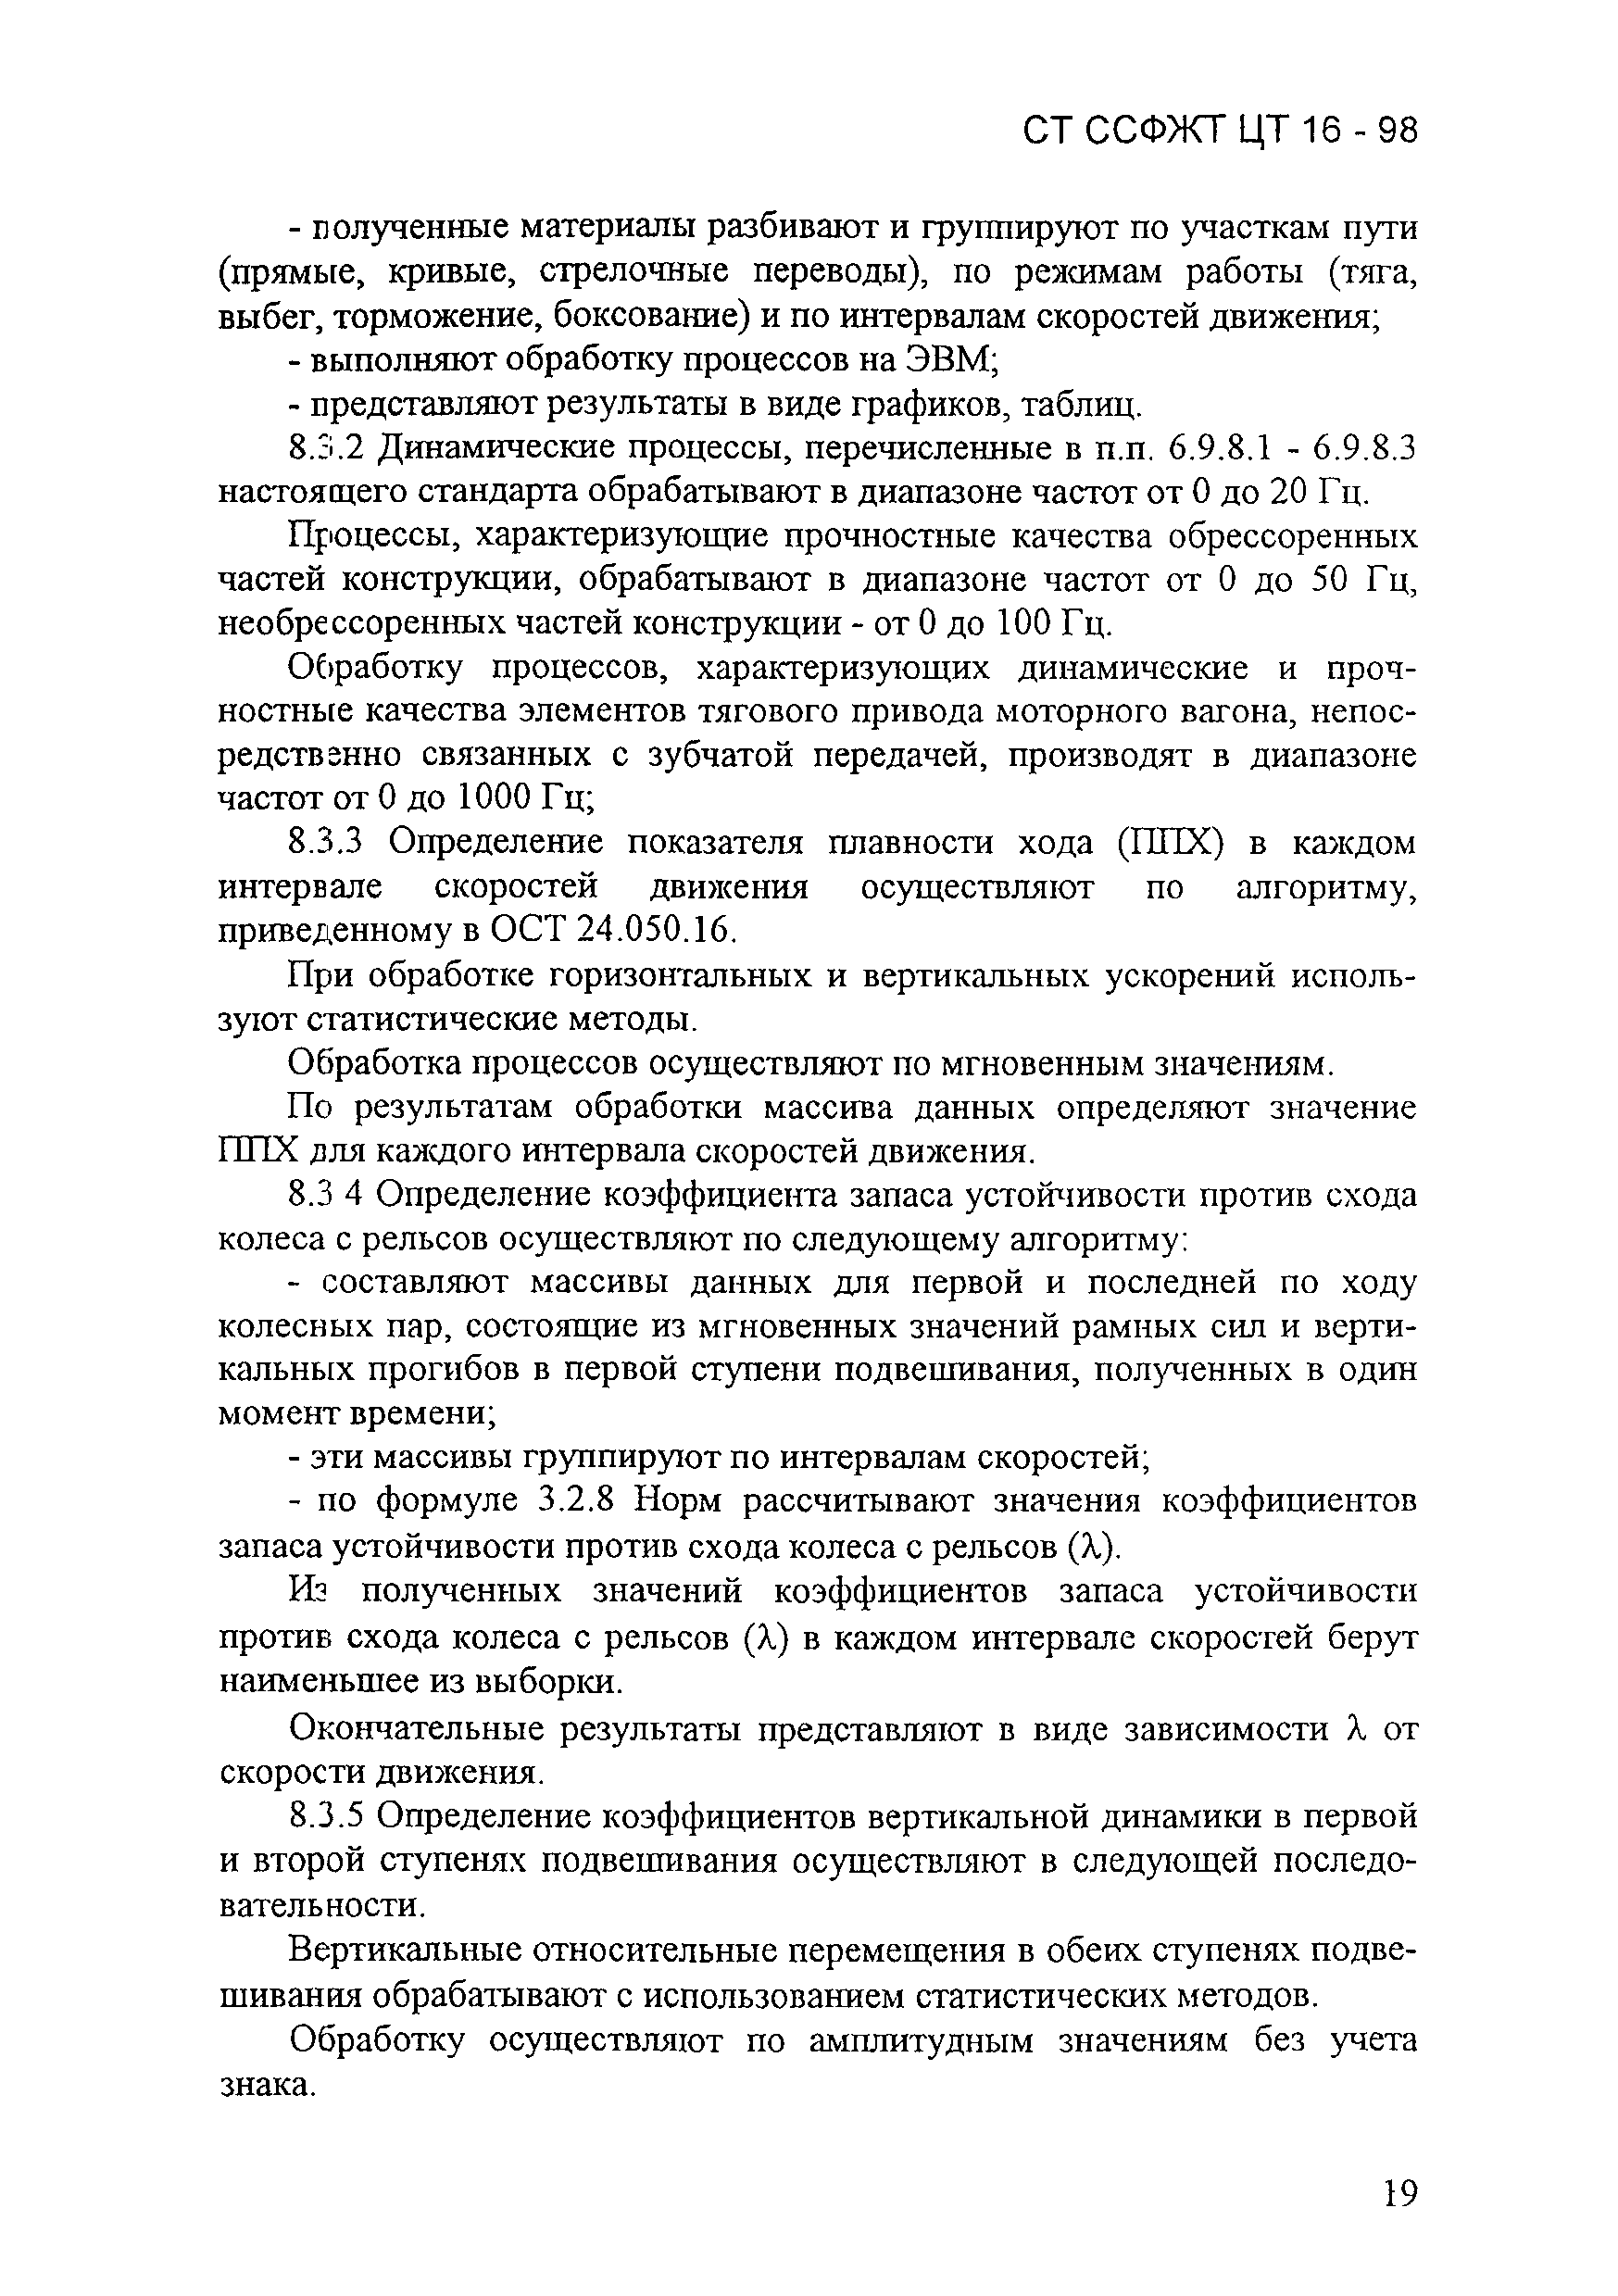 СТ ССФЖТ ЦТ 16-98